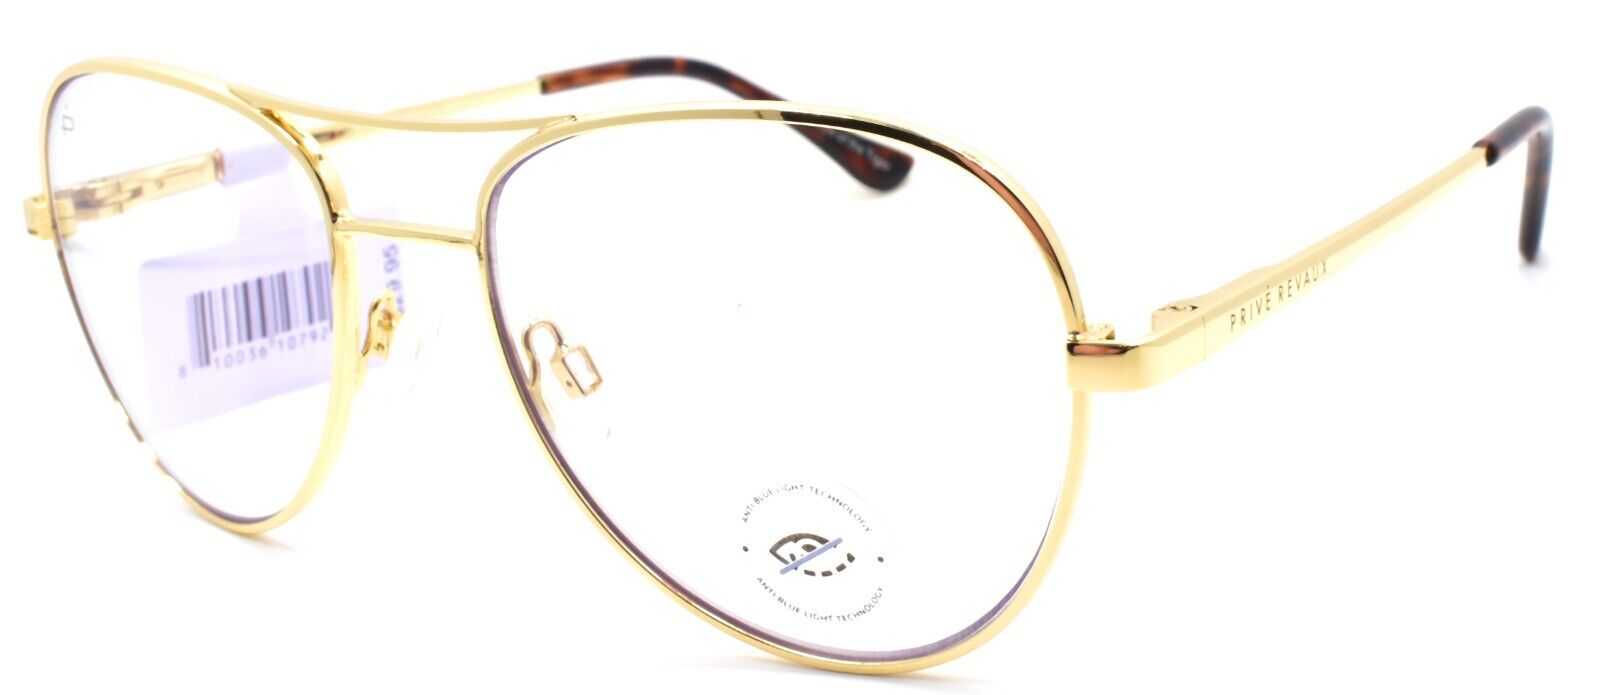 1-Prive Revaux Take Over Gold Eyeglasses Frames Blue Light Blocking RX-ready Gold-810036107921-IKSpecs